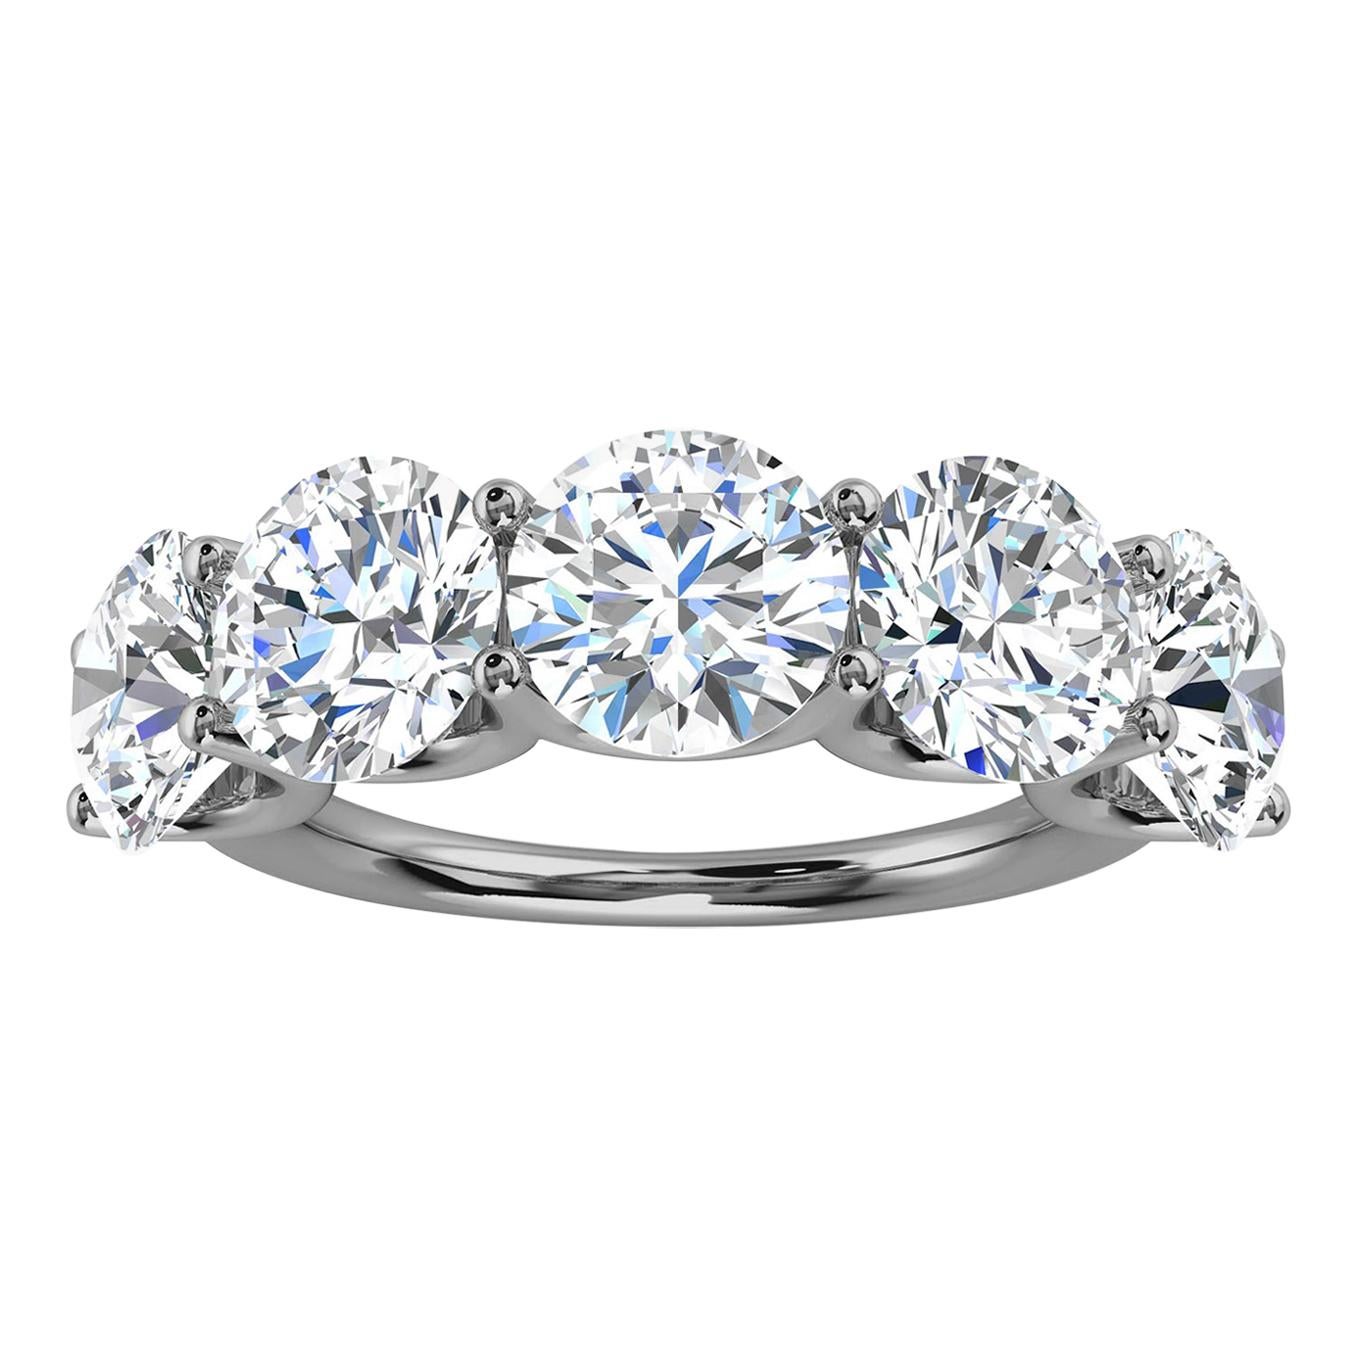 18K White Gold Sevilla Diamond Ring '5 Ct. Tw' For Sale